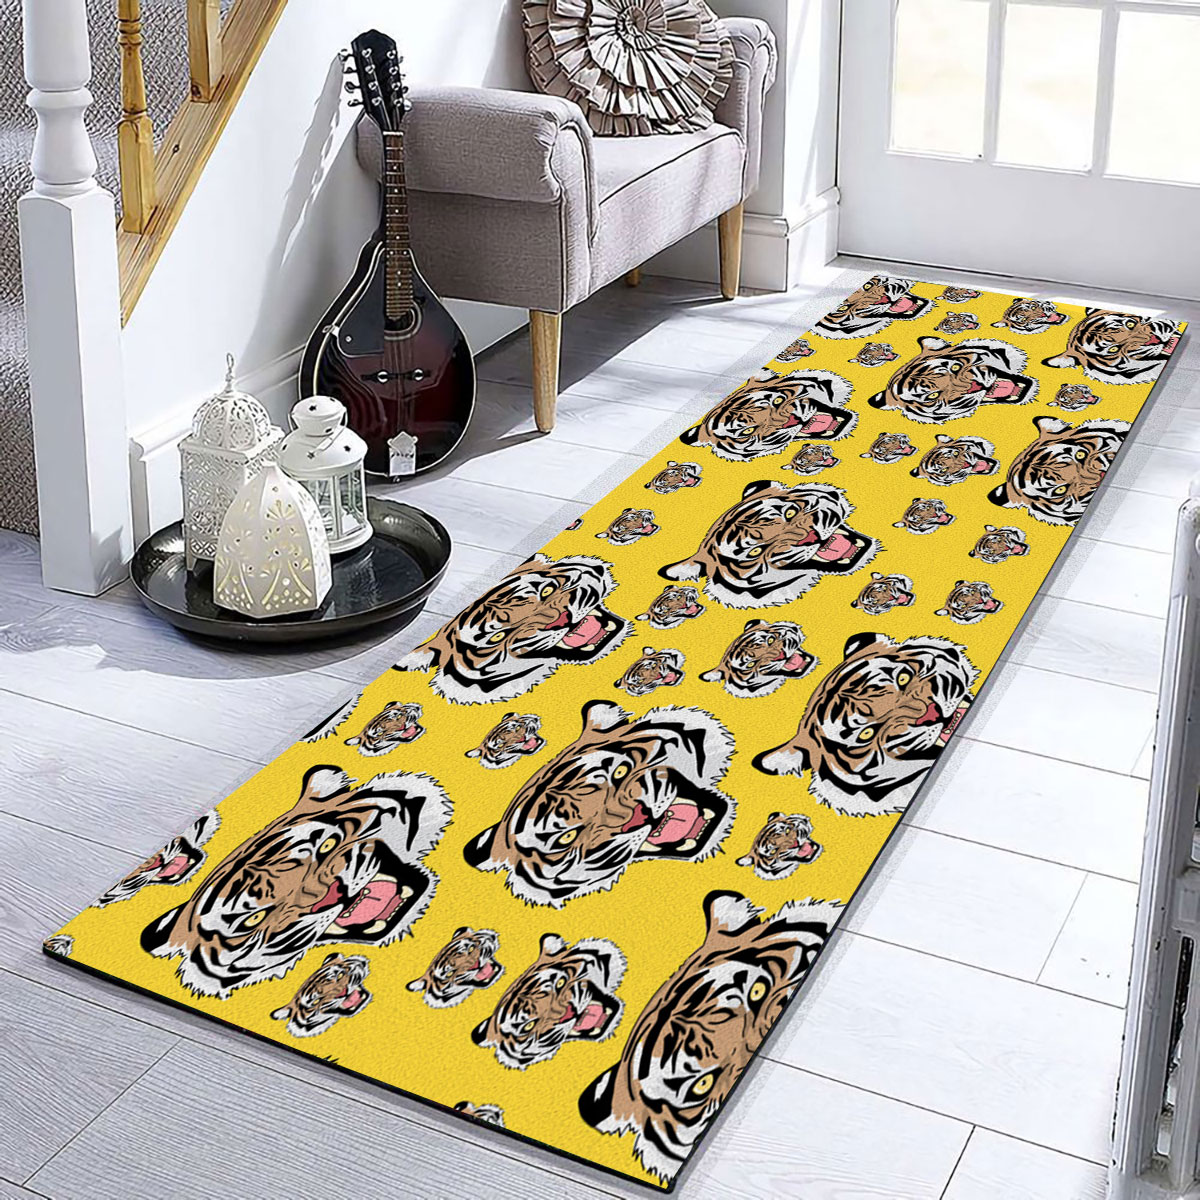 Tiger Face Runner Carpet 6